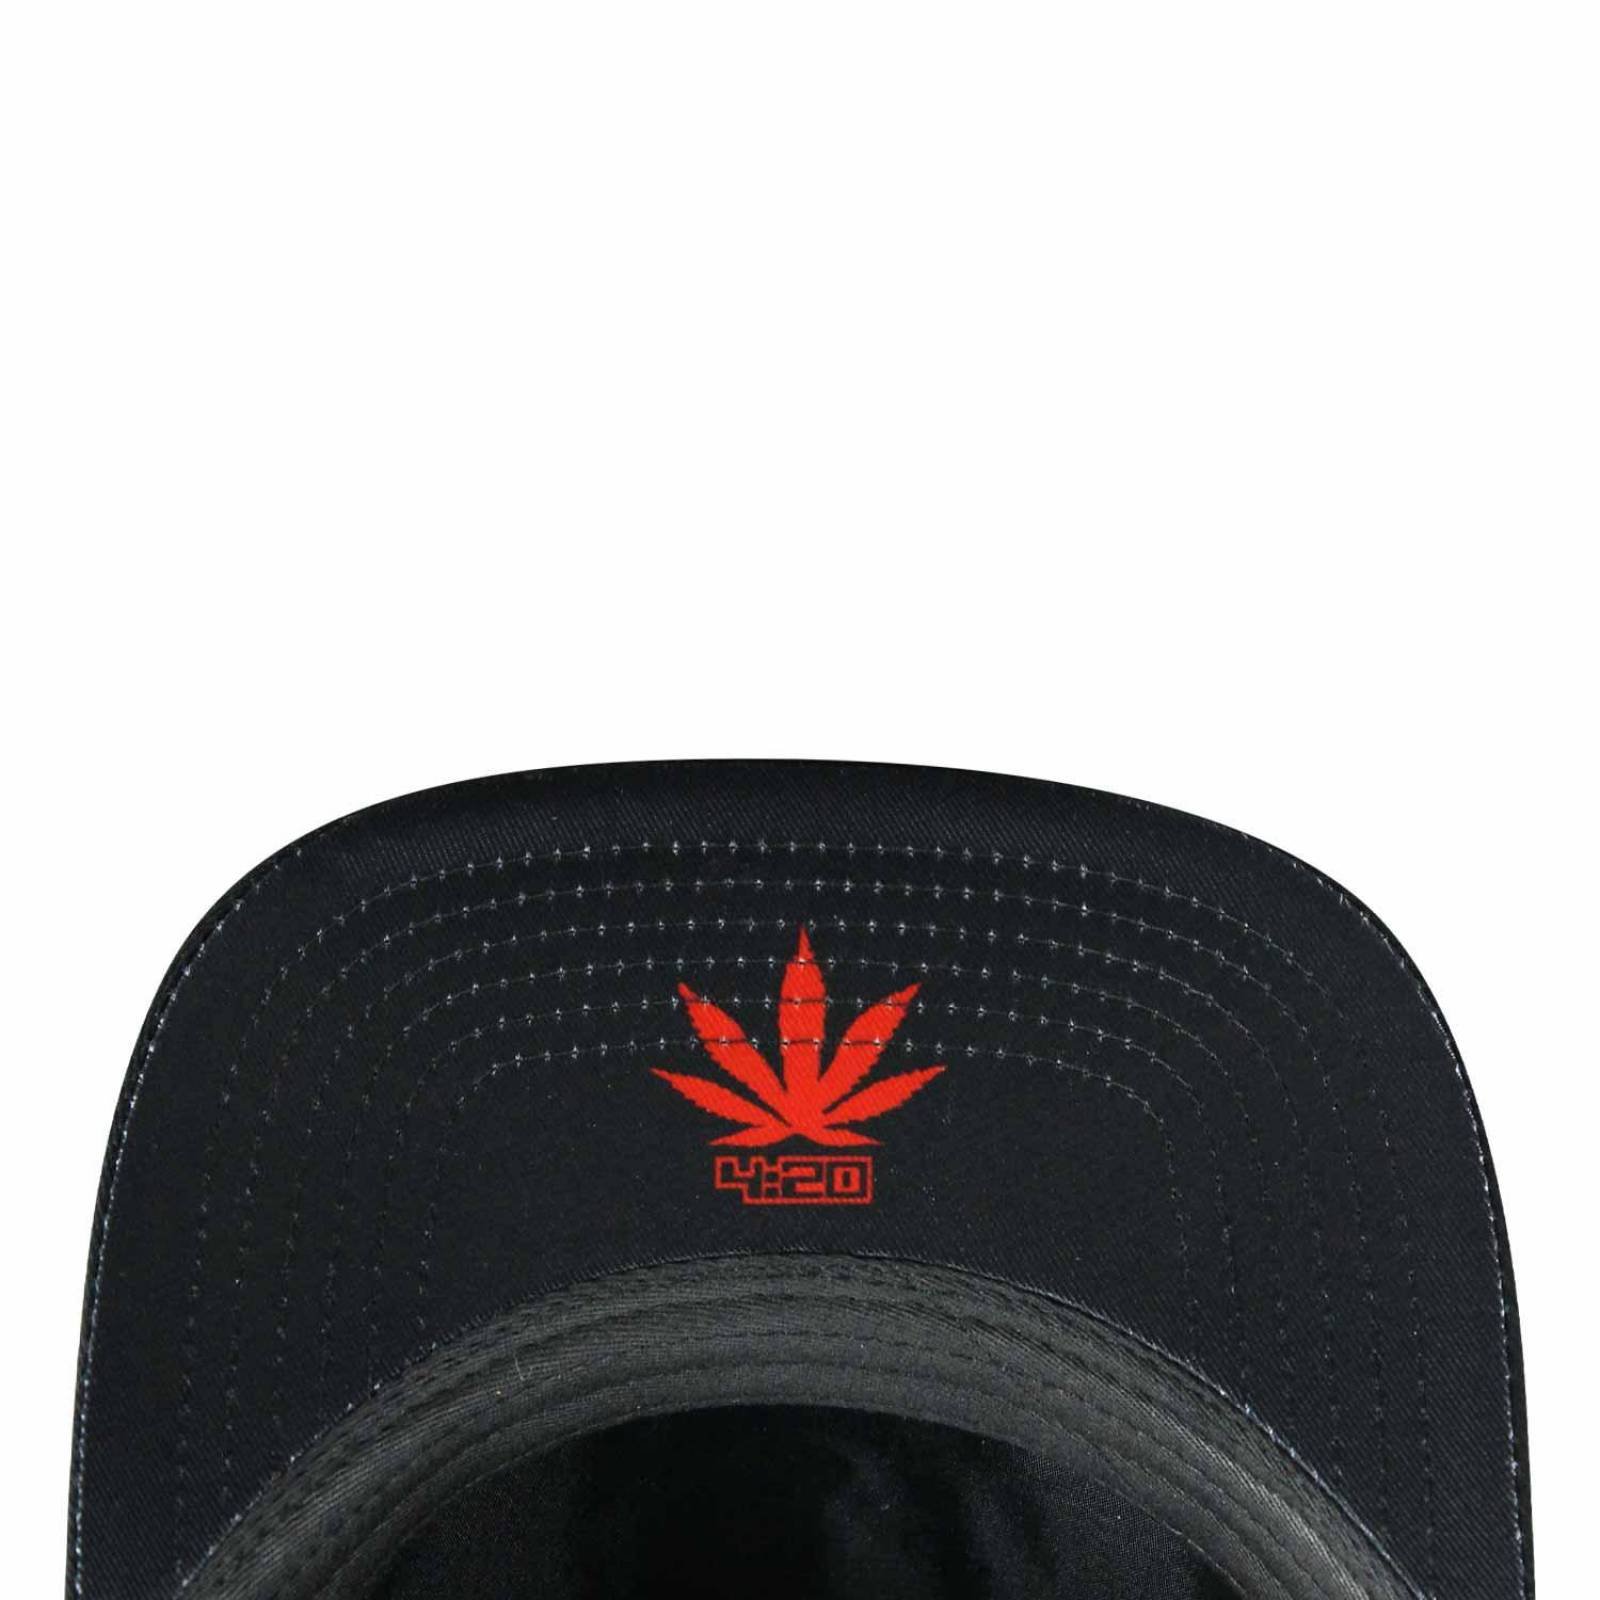 Gorra JC Hats Snapback Lr Music 420 Negro/Negro Unitalla 